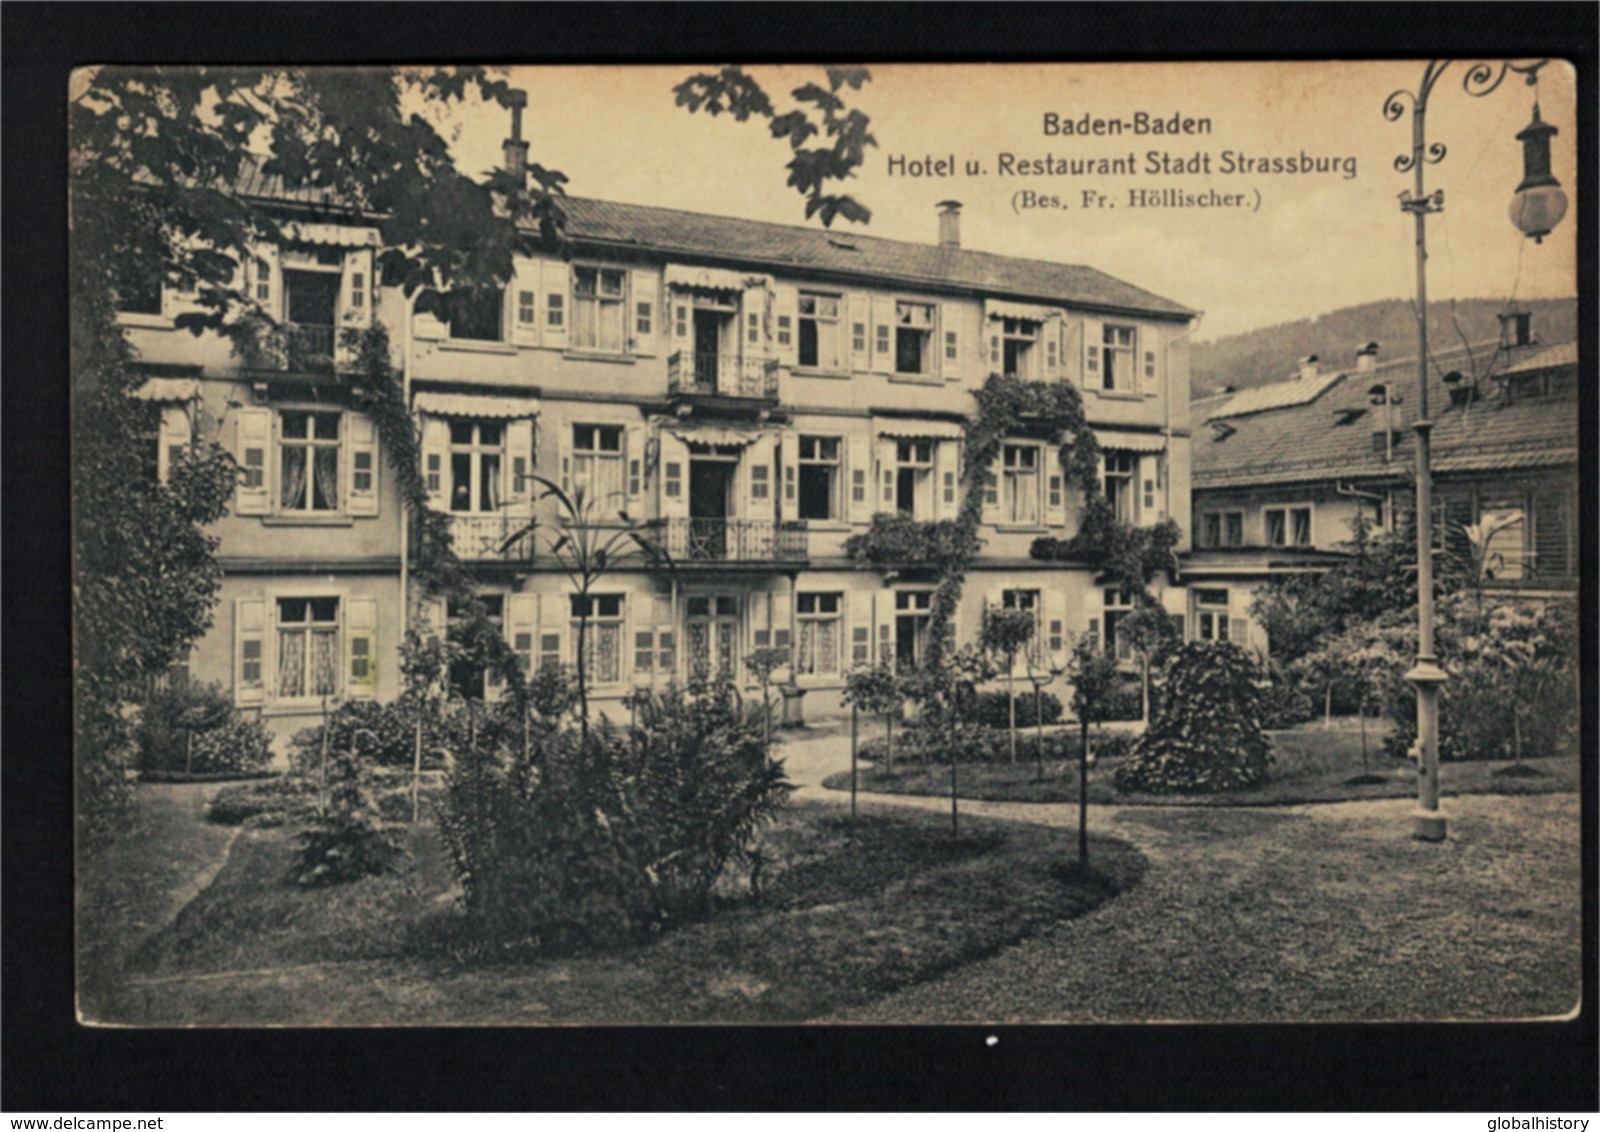 DE2526 - BADENWURTENBURG - BADEN BADEN - HOTEL RESTAURANT STADT STRASSBURG - Baden-Baden